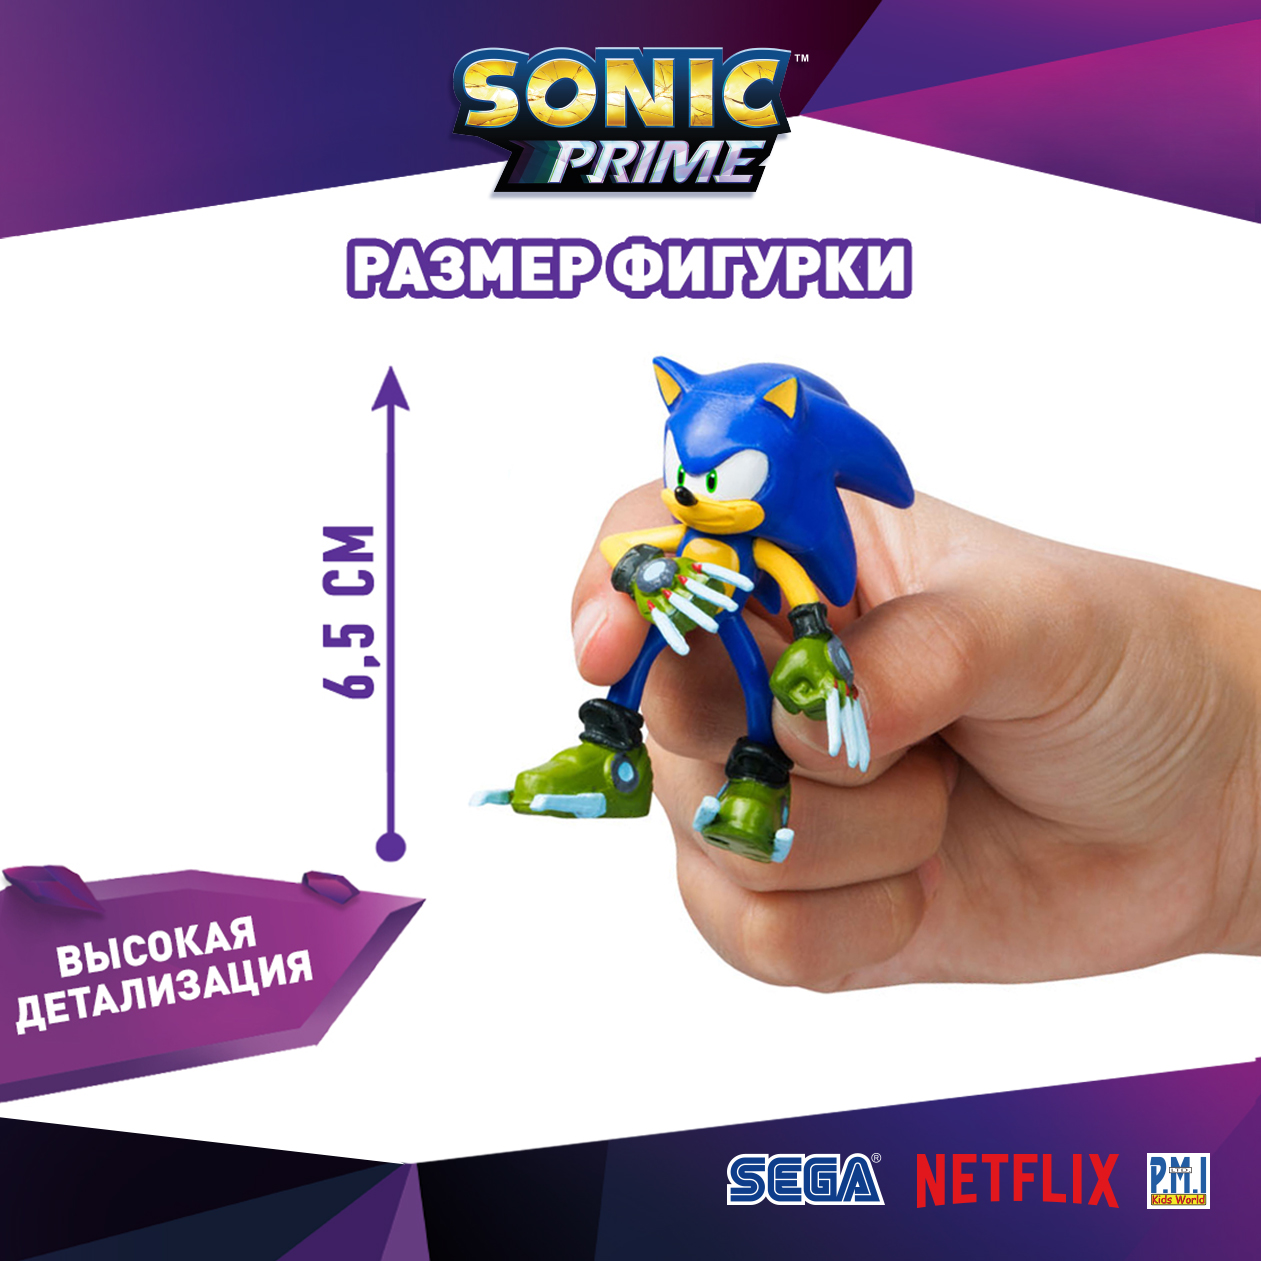 Набор игровой PMI Sonic Prime фигурки 3 шт SON2021-A - фото 8